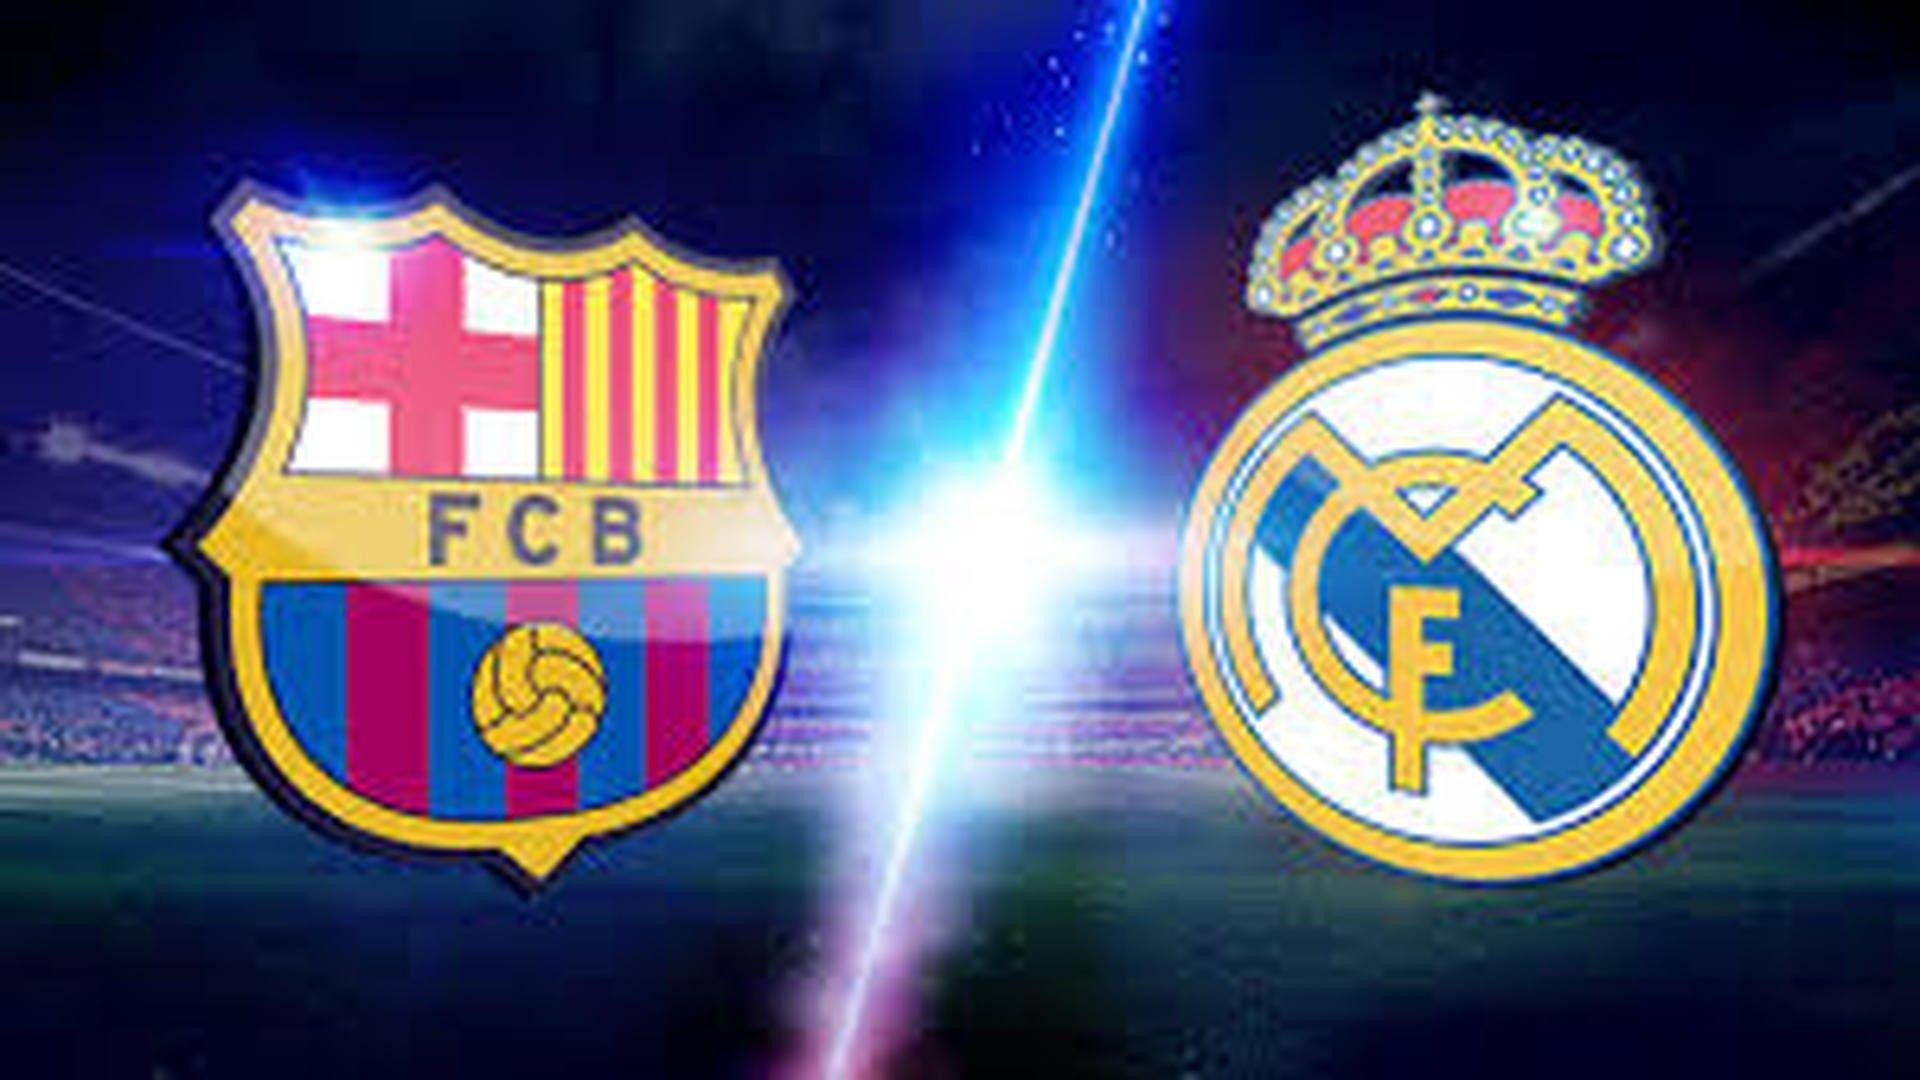 Real Madrid vs Barcelona Wallpapers - Top Free Real Madrid vs Barcelona Backgrounds ...